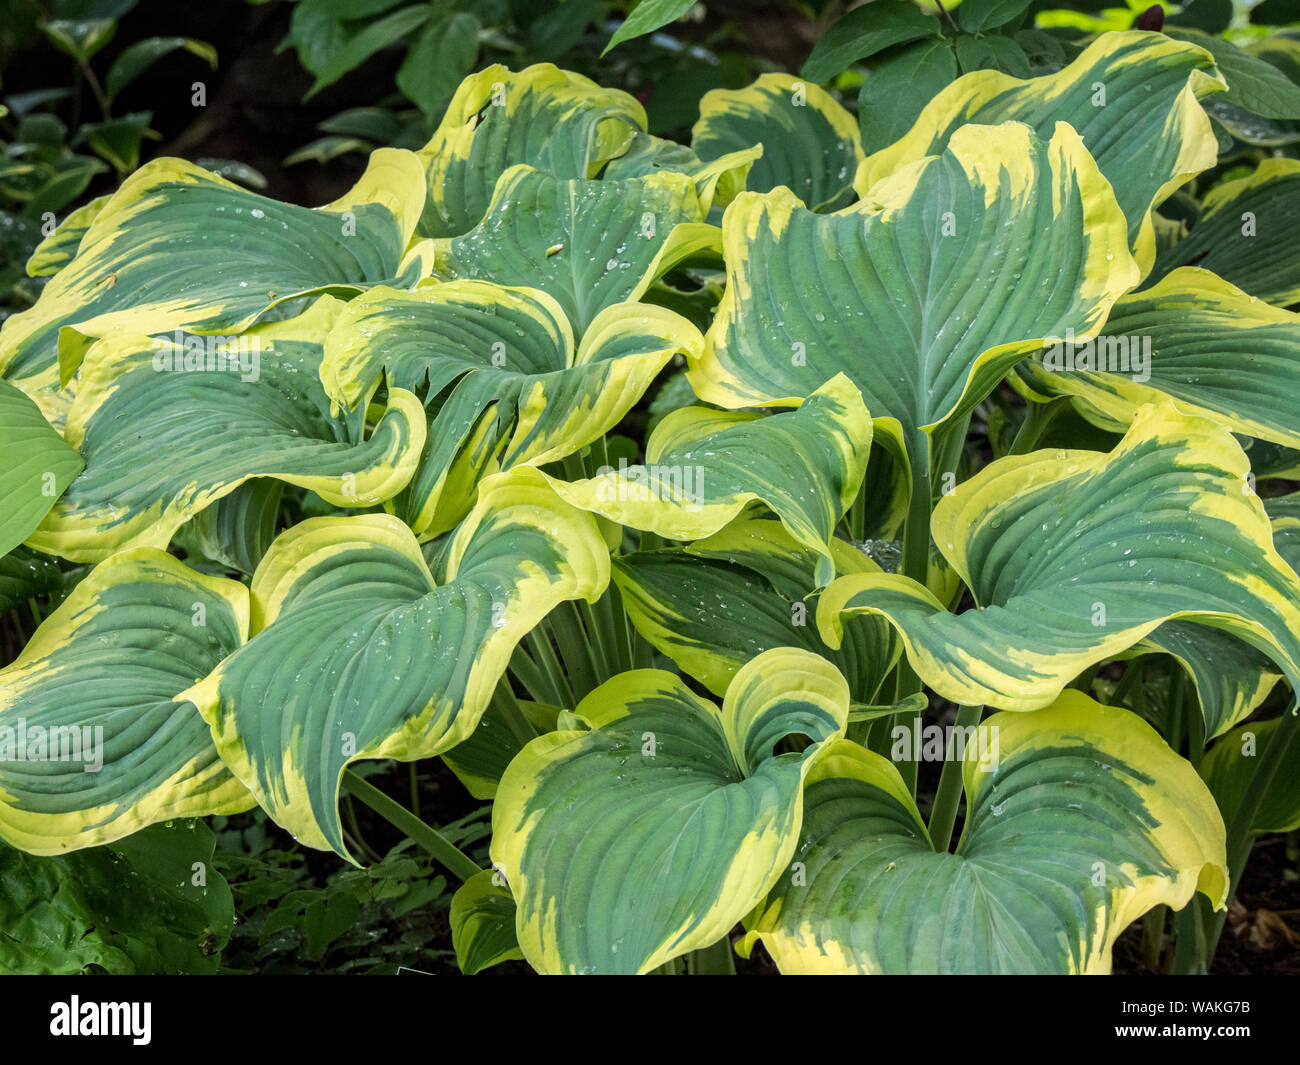 USA, Pennsylvania. Variegated green and yellow hosta. Stock Photo